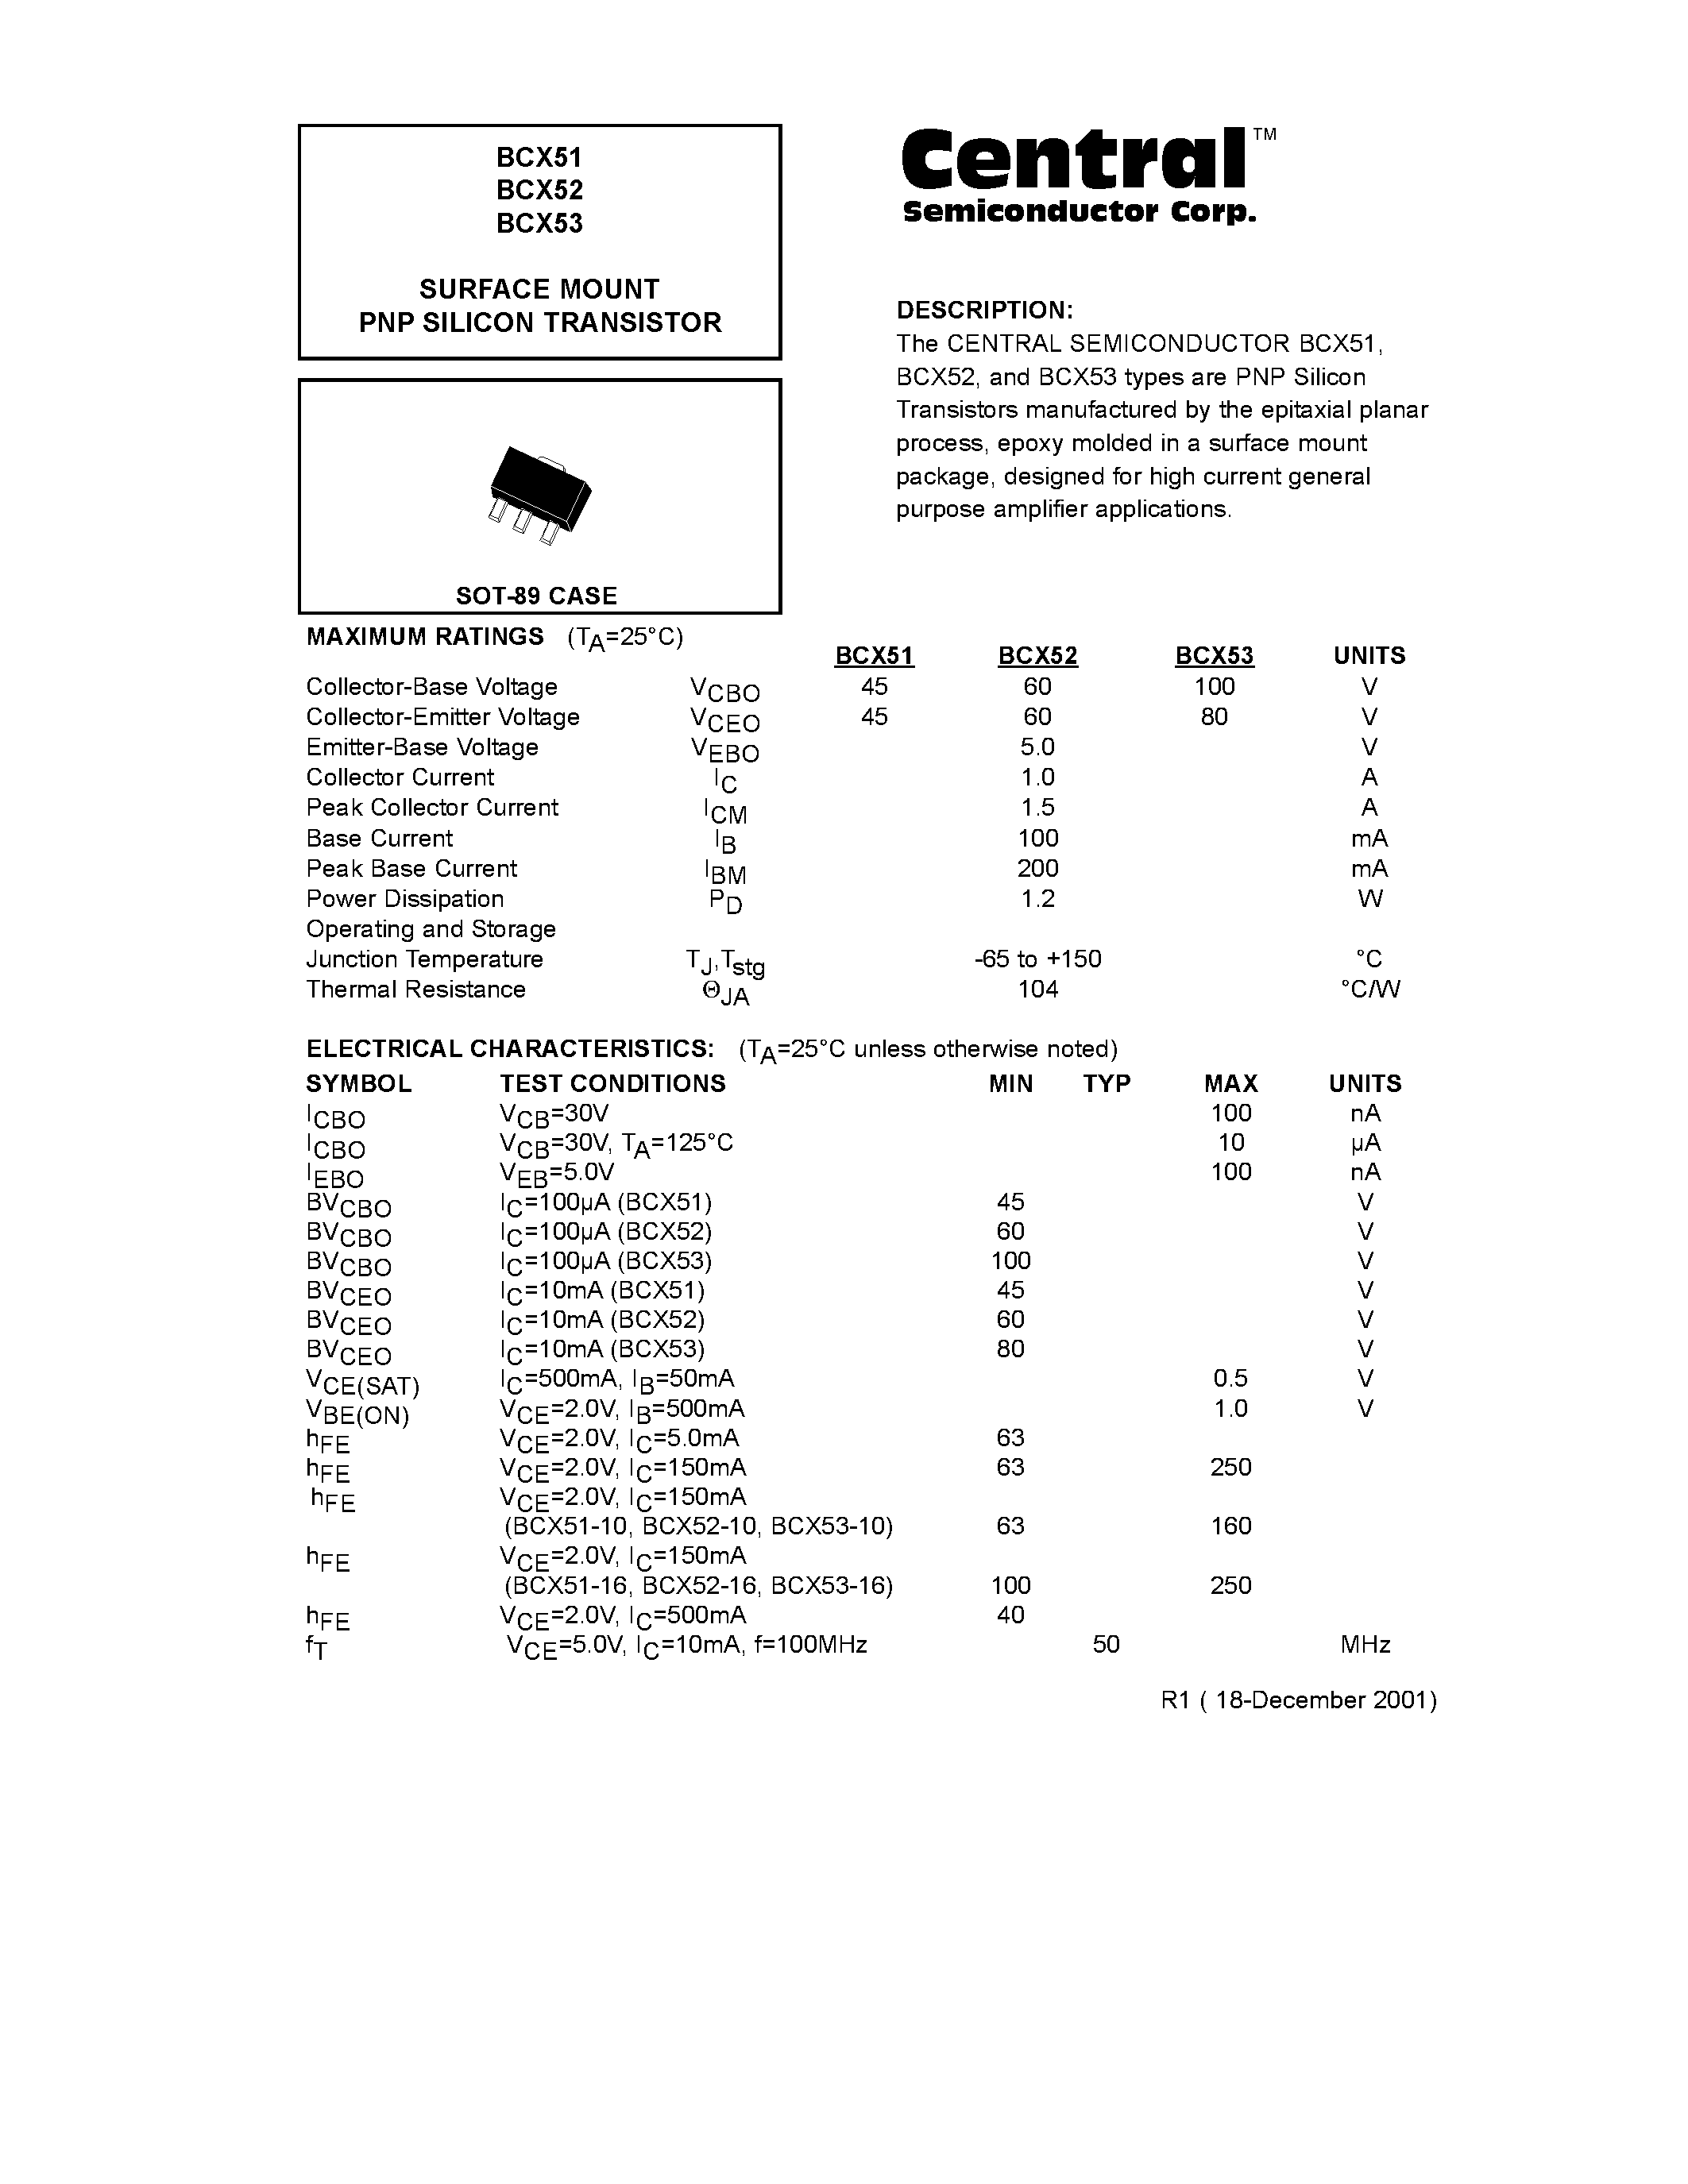 Datasheet BCX51 - SURFACE MOUNT PNP SILICON TRANSISTOR page 1